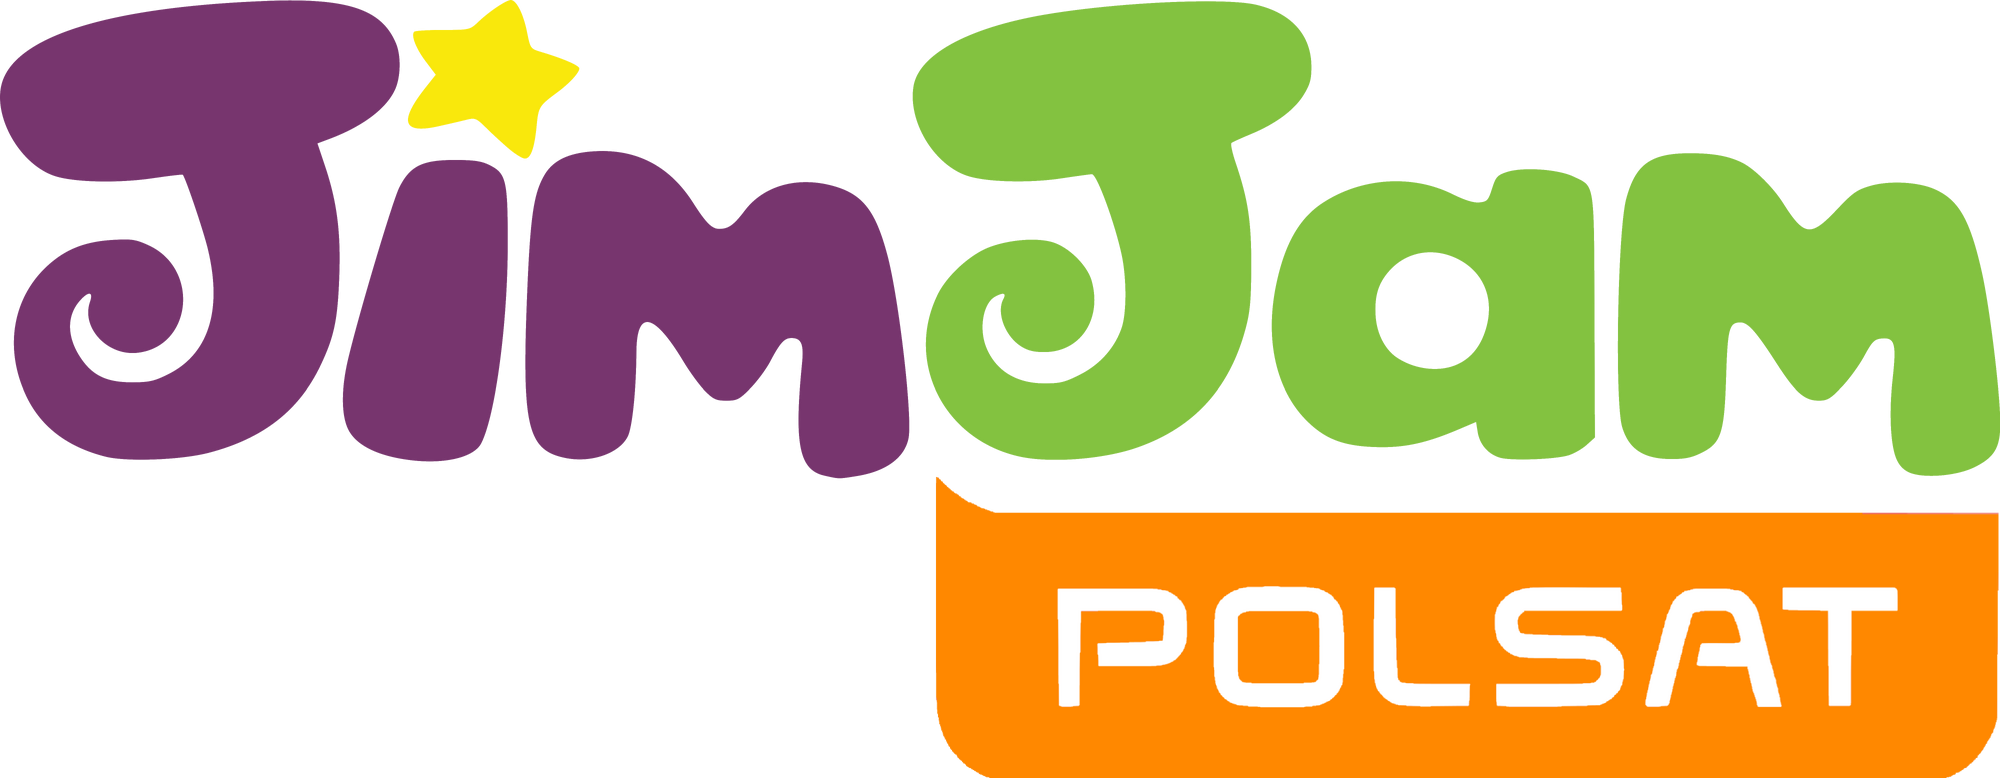 Телеканалы джем. Телеканал Джим Джам. JIMJAM Polsat logo. Телеканал JIMJAM логотип. Детские каналы.